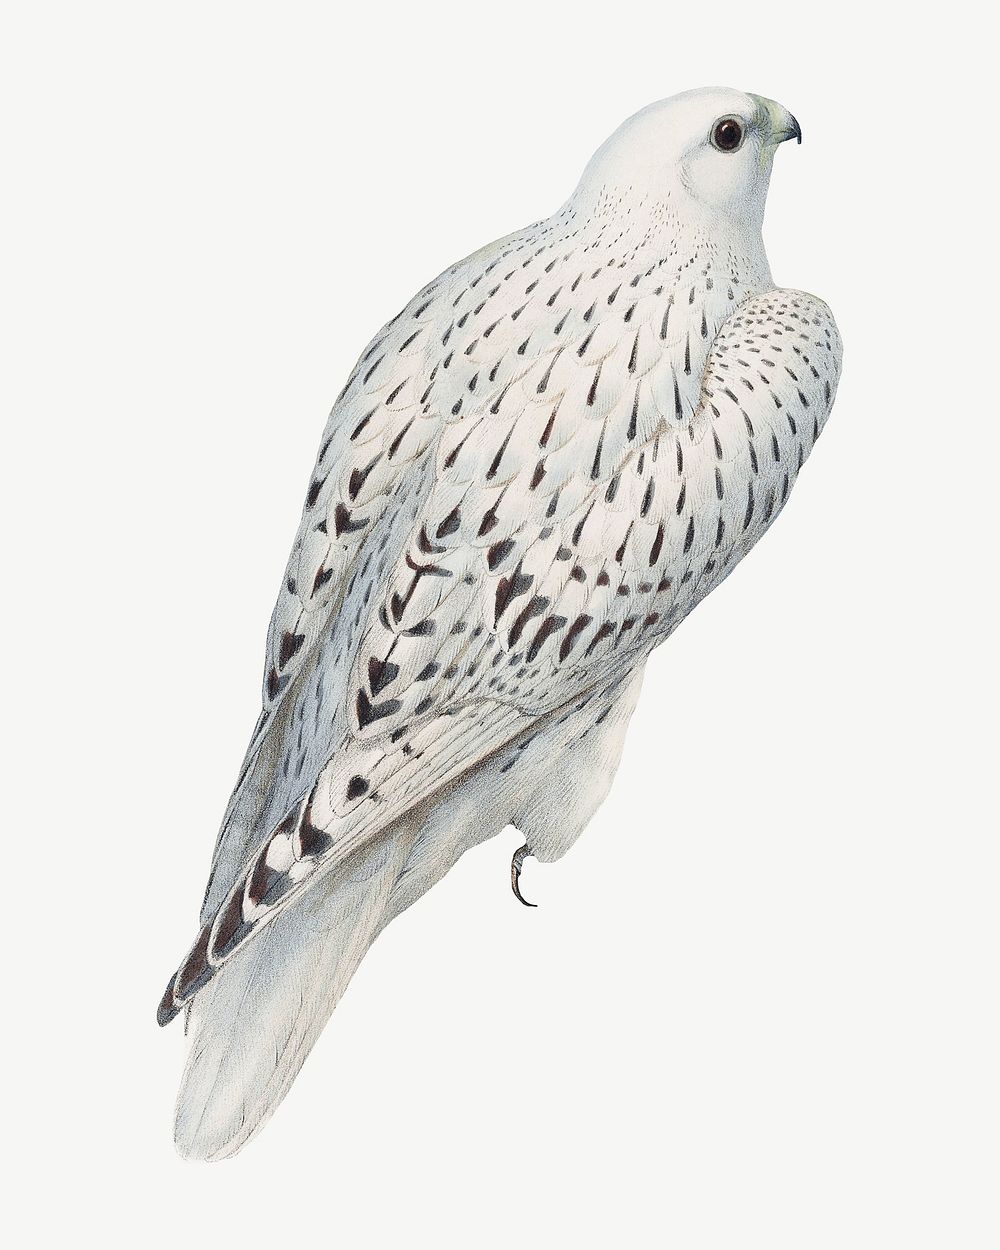 Greenland falcon bird, vintage animal collage element psd